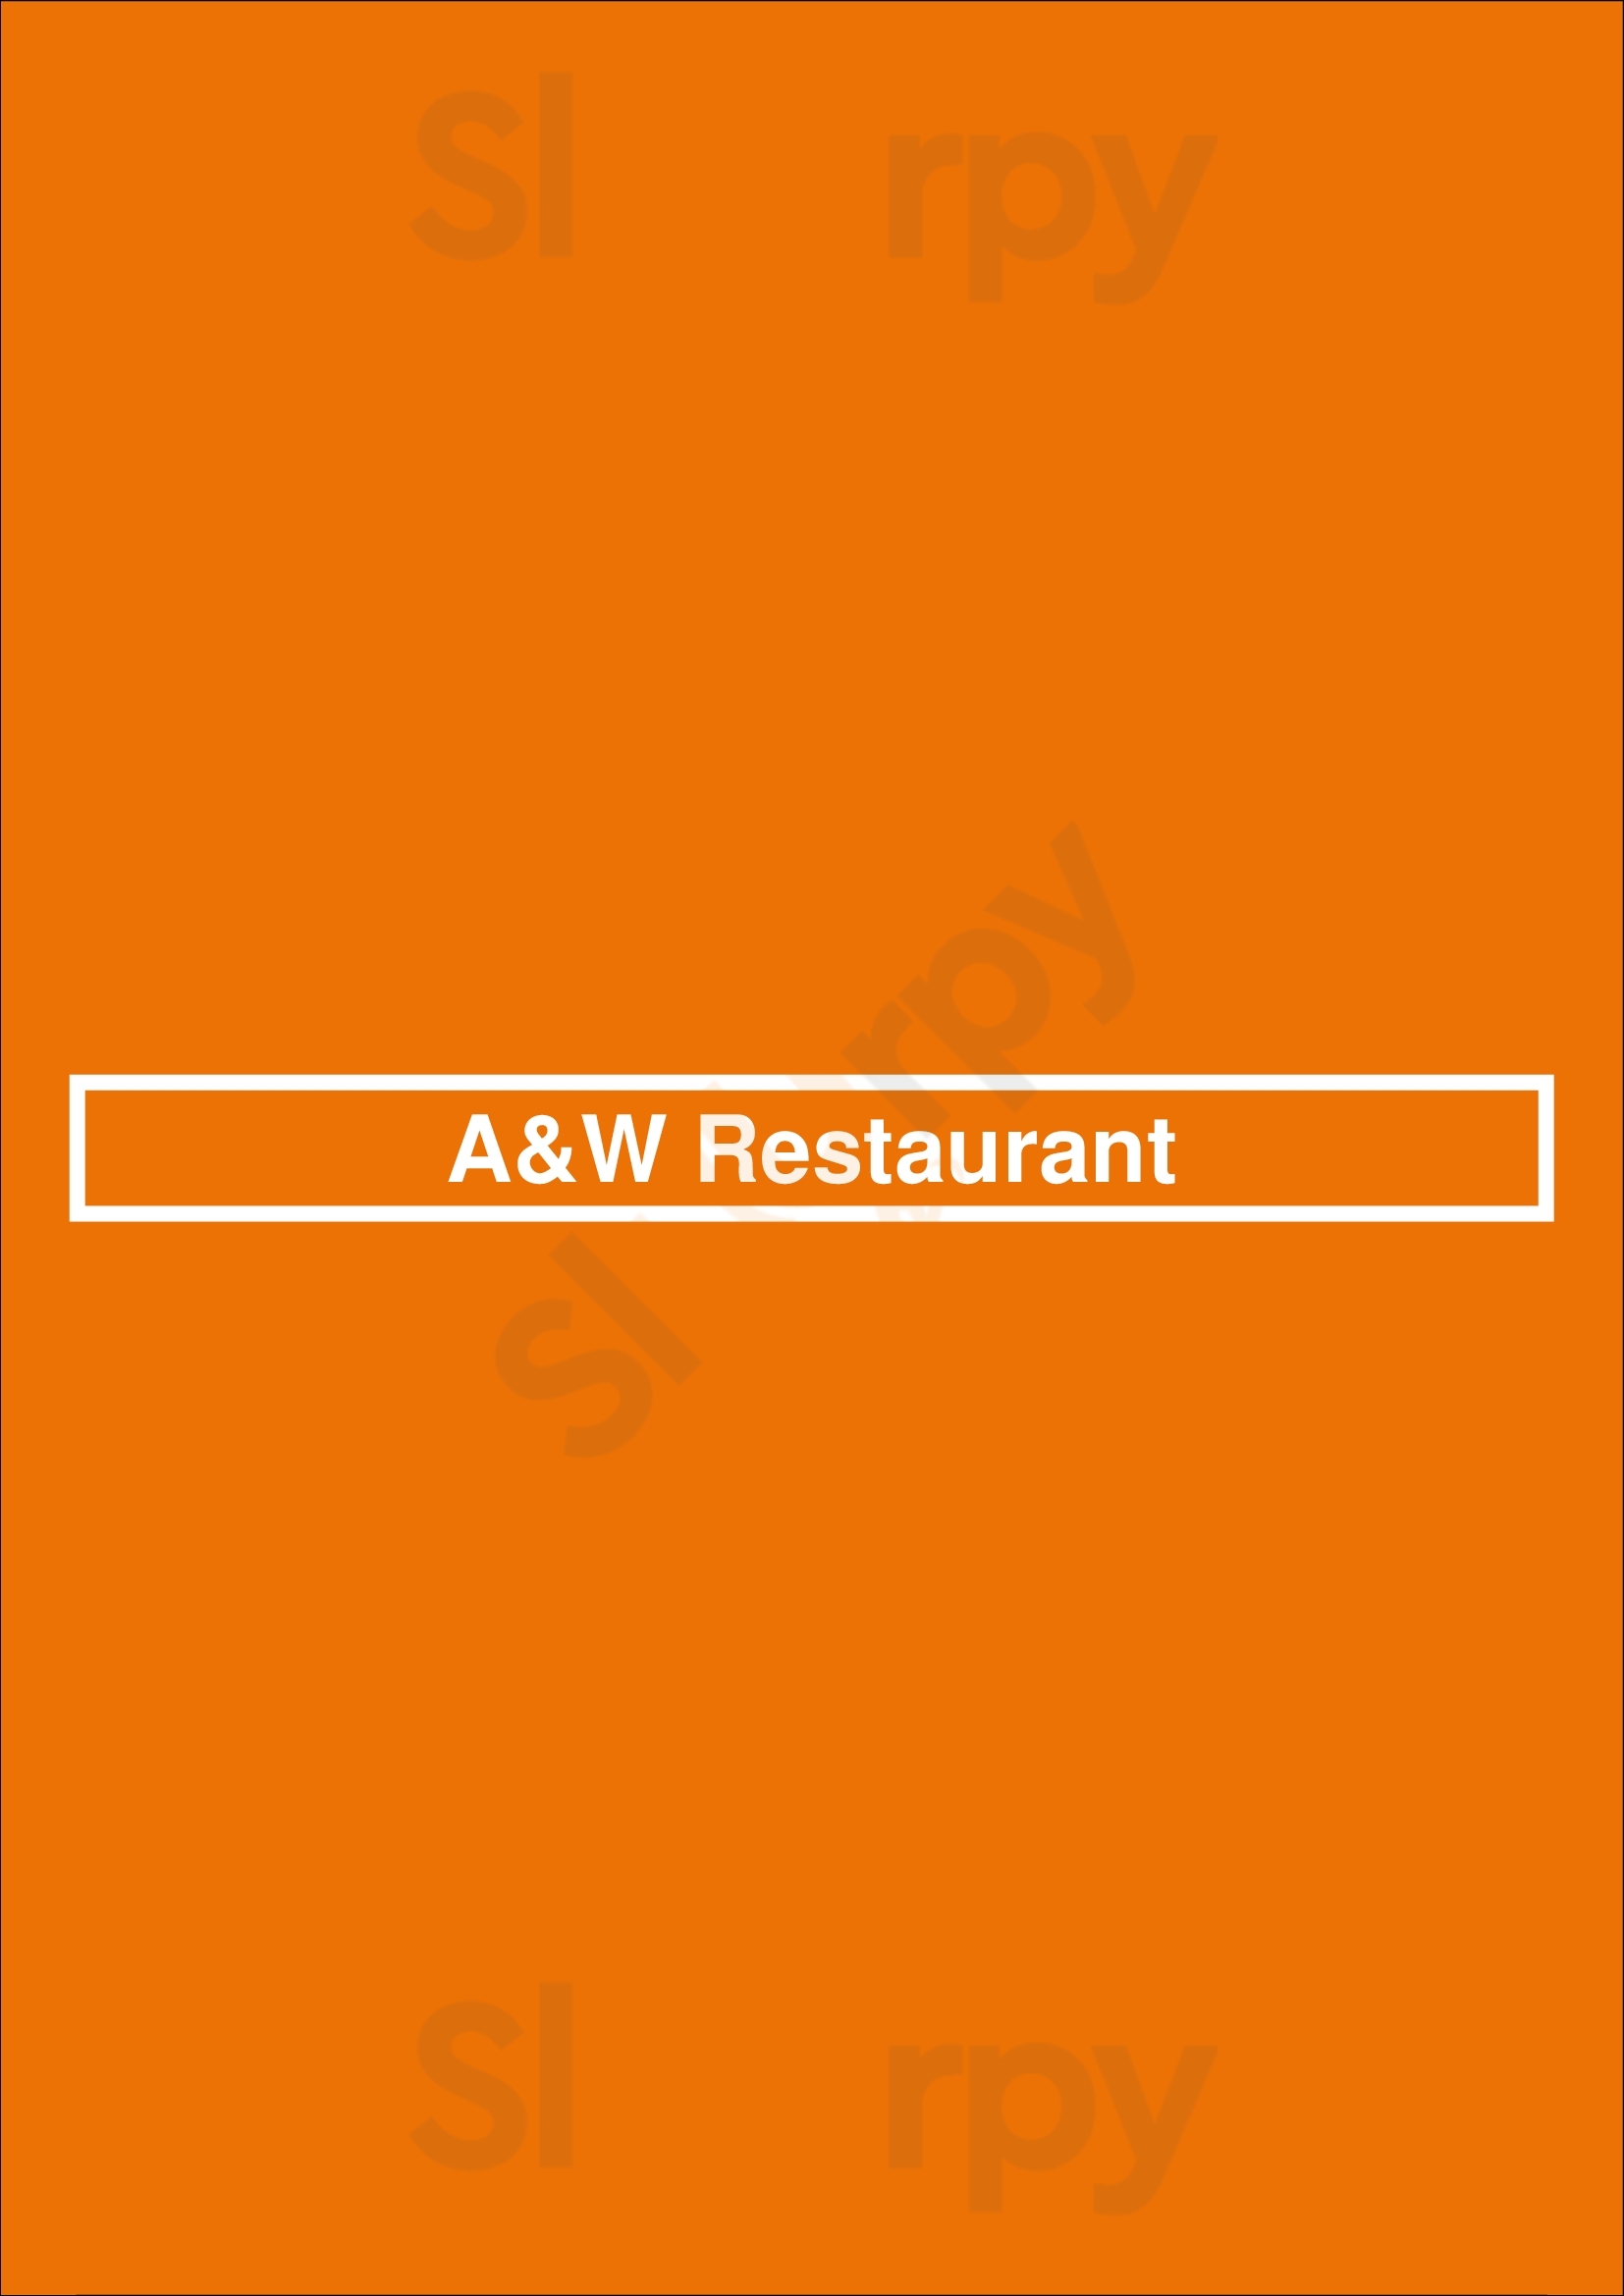 A&w Restaurant Vancouver Menu - 1